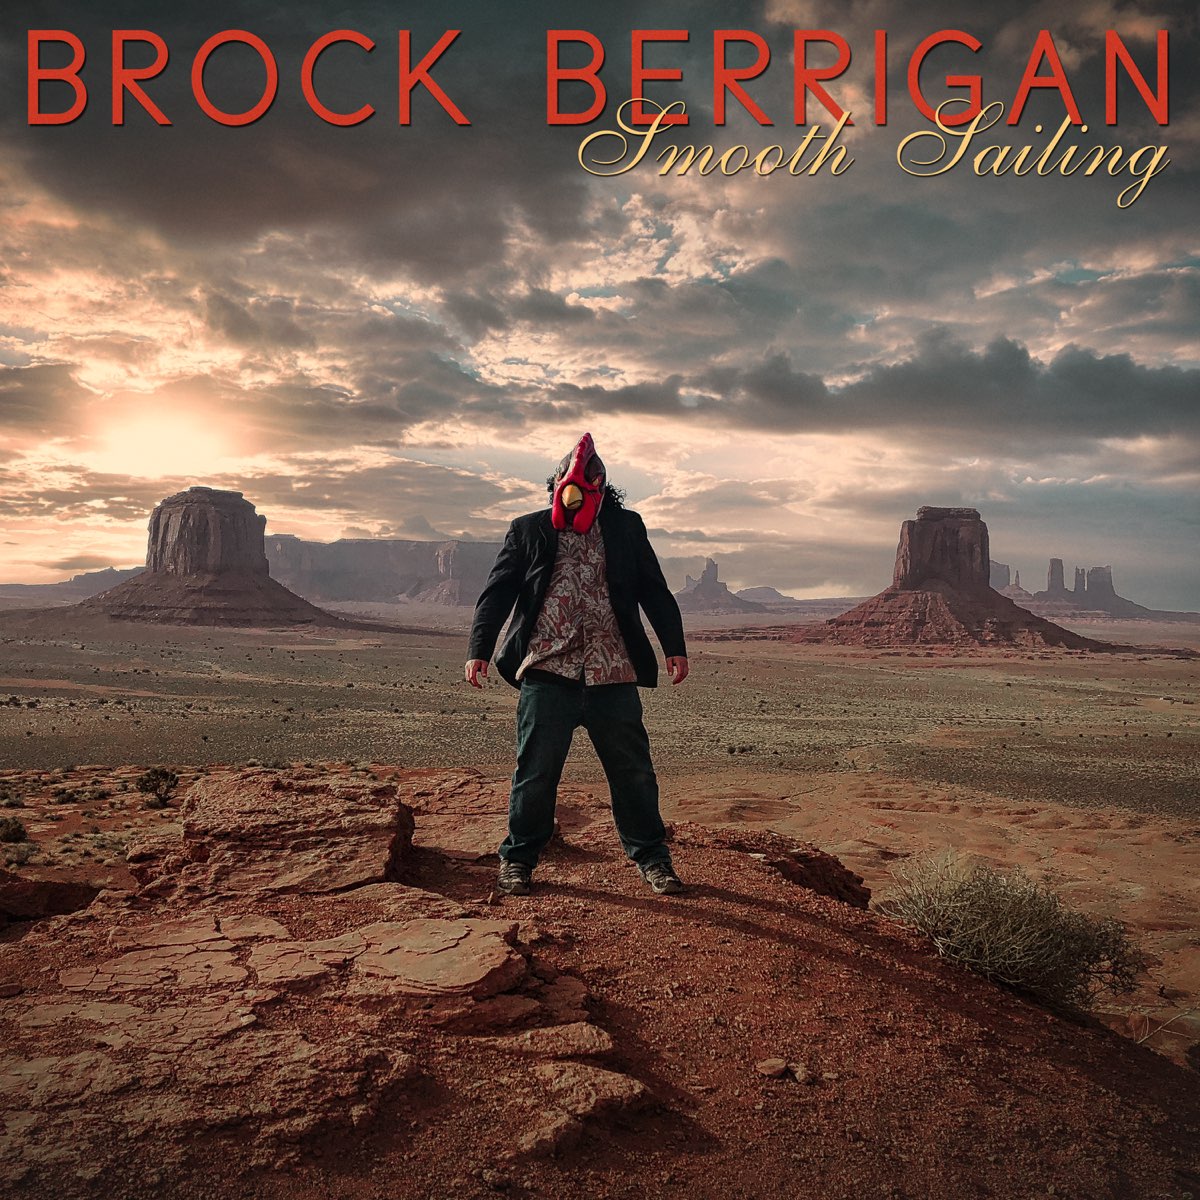 Brock Berrigan "Smooth Sailing" 12" Vinyl